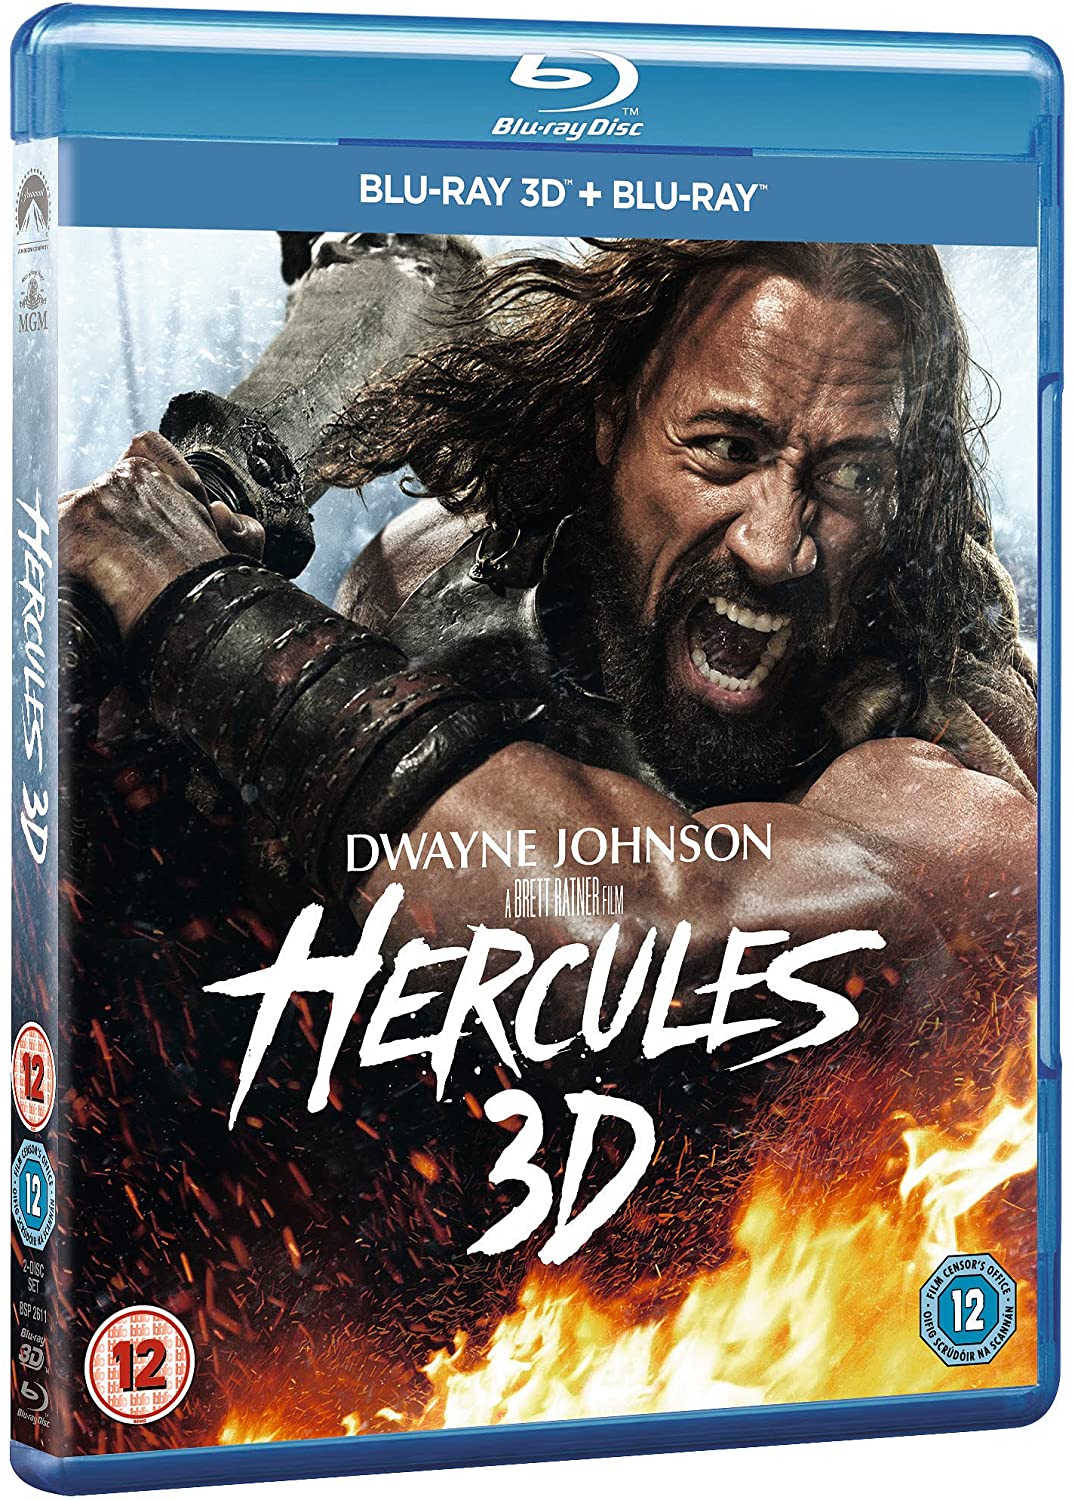 Hercules [Blu-ray 3D] [2017] [Region Free]